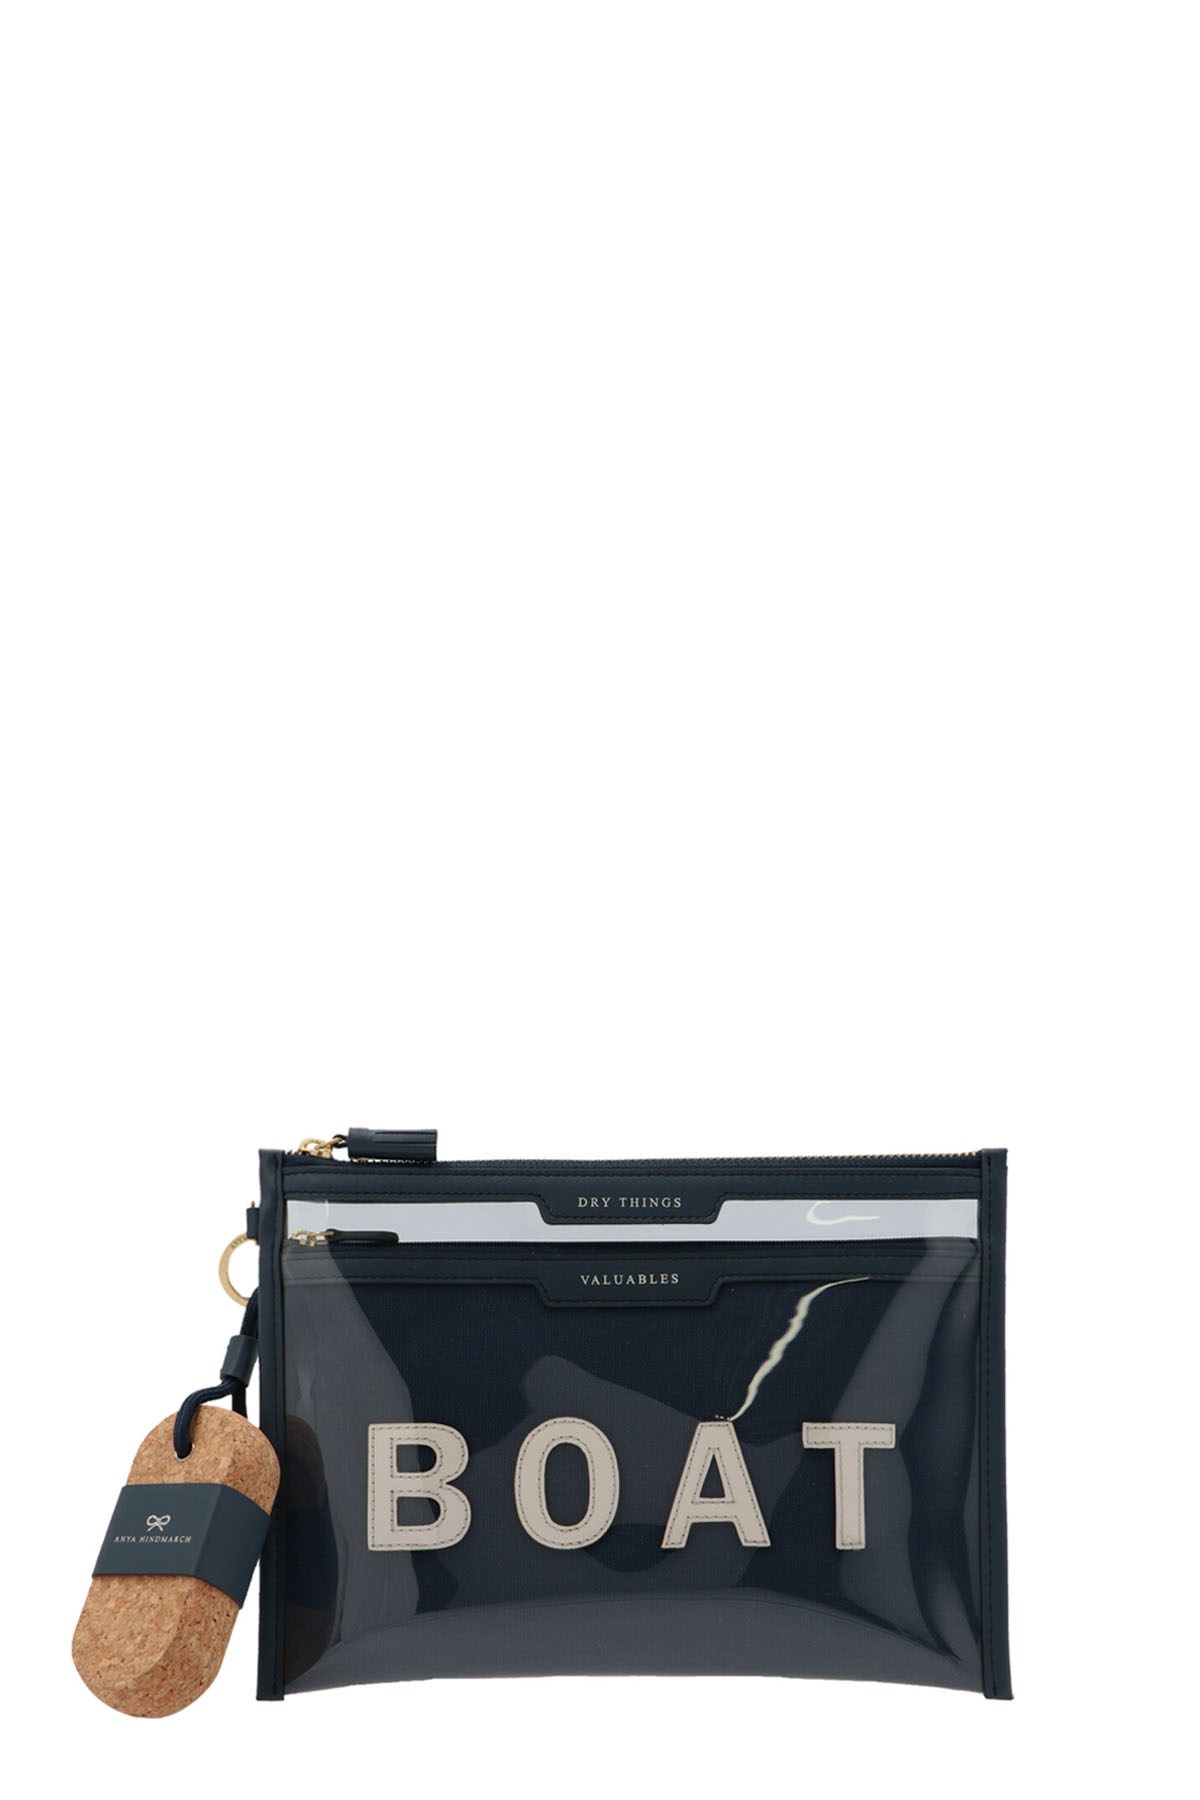 ANYA HINDMARCH 'Dry Things Boat' Clutch Bag